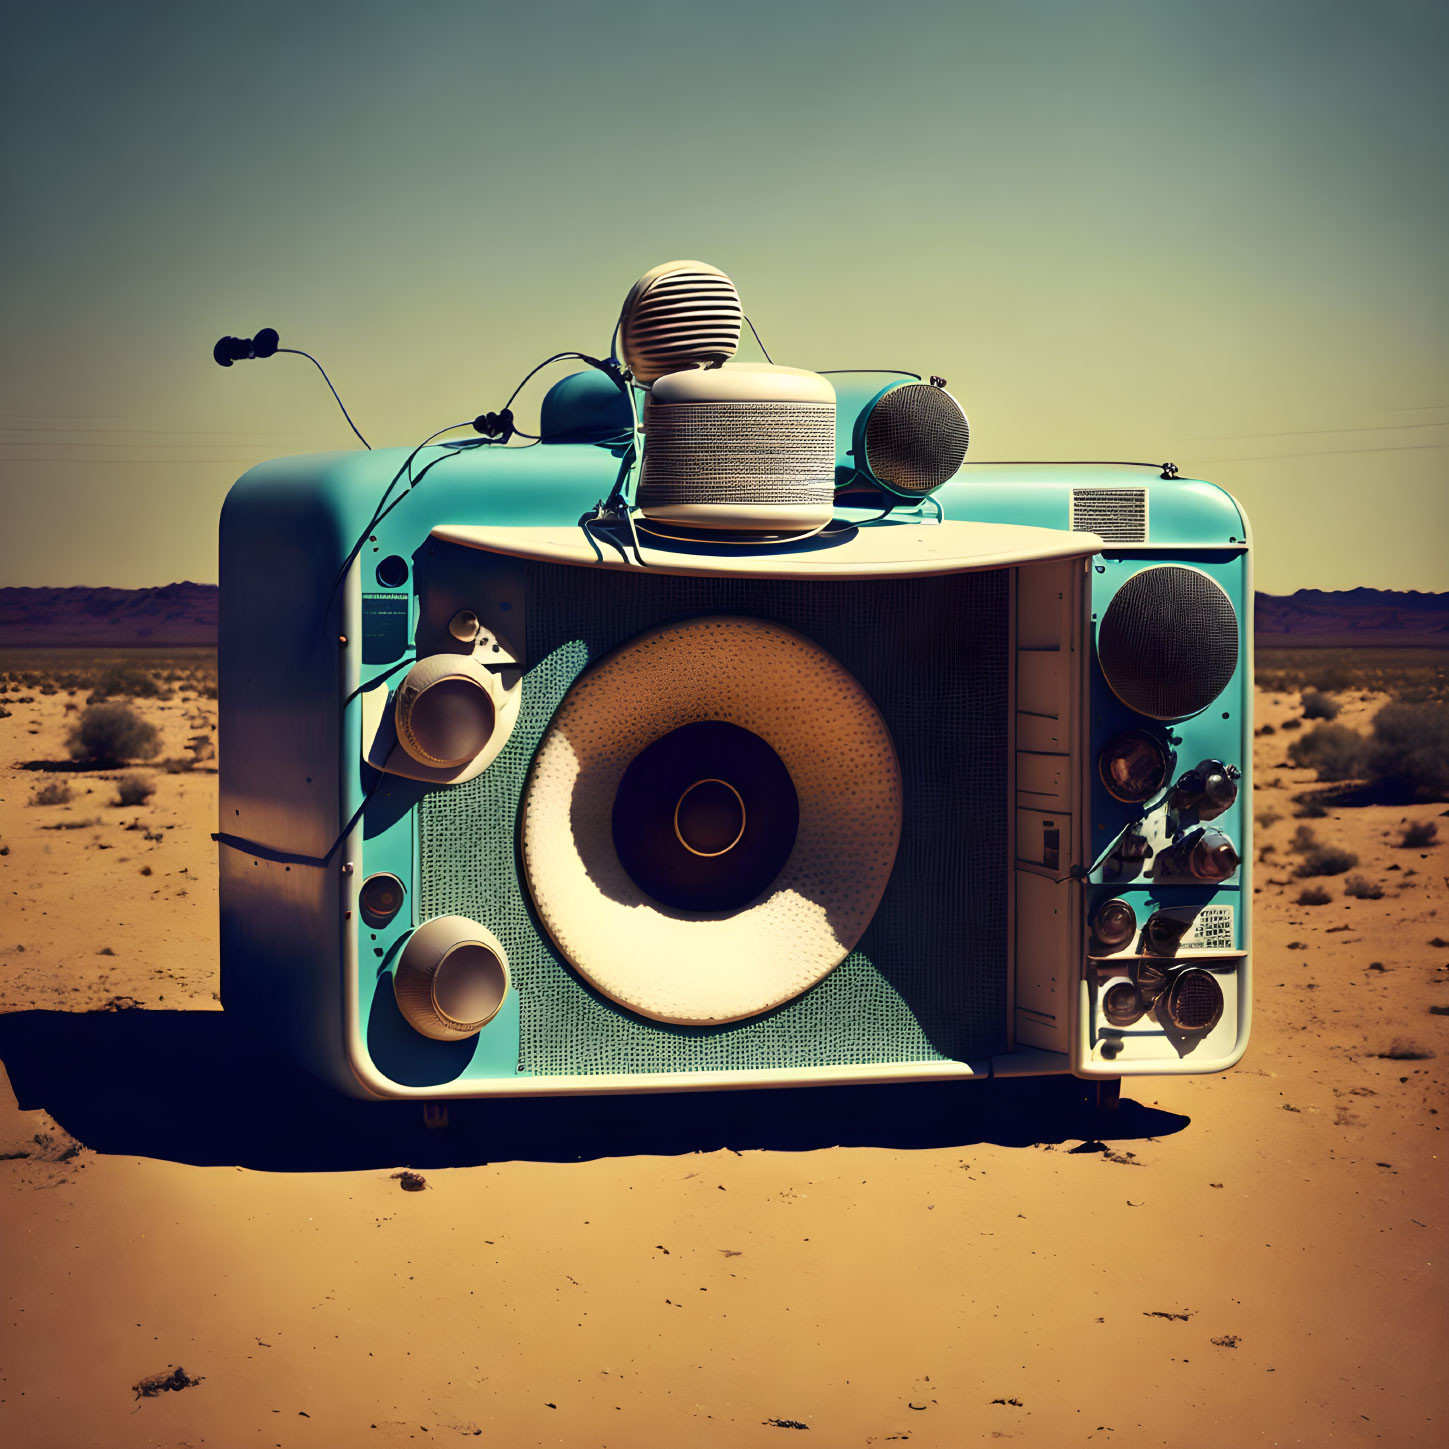 Vintage Turquoise Boombox in Desert Landscape